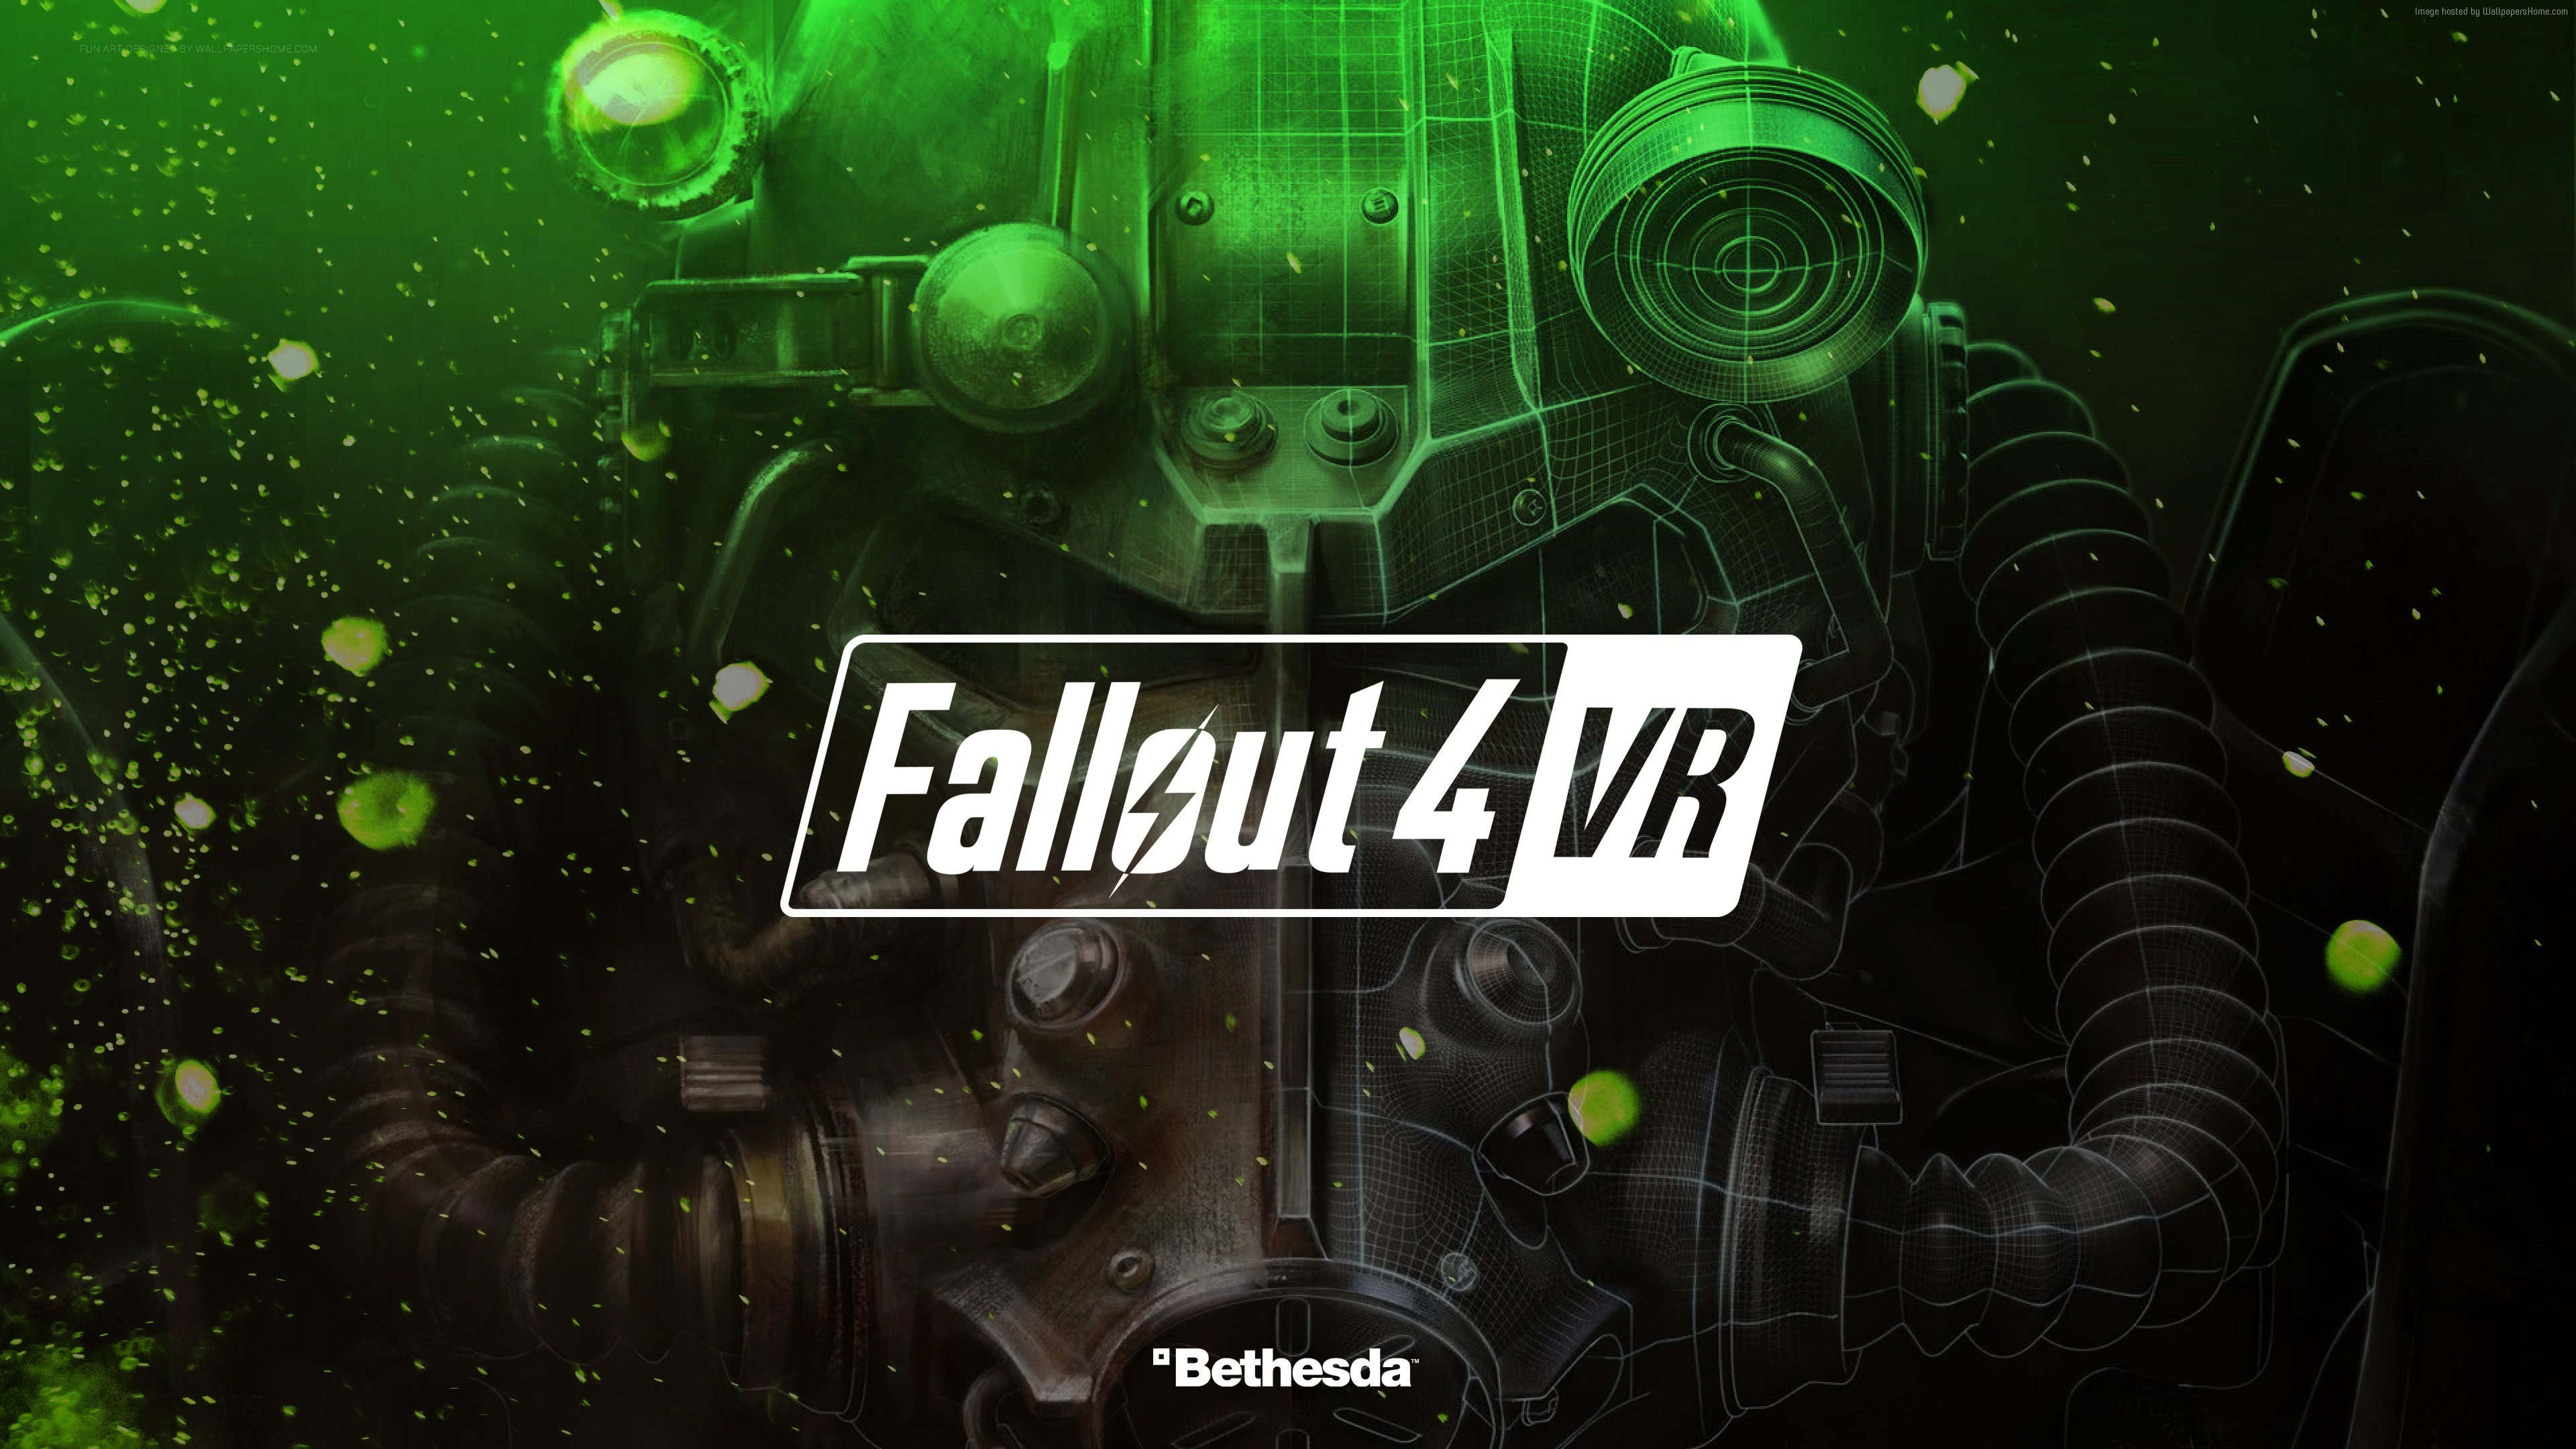 Fallout 4 Vr Uhd 4k Wallpaper - Fallout 4 Vr - HD Wallpaper 